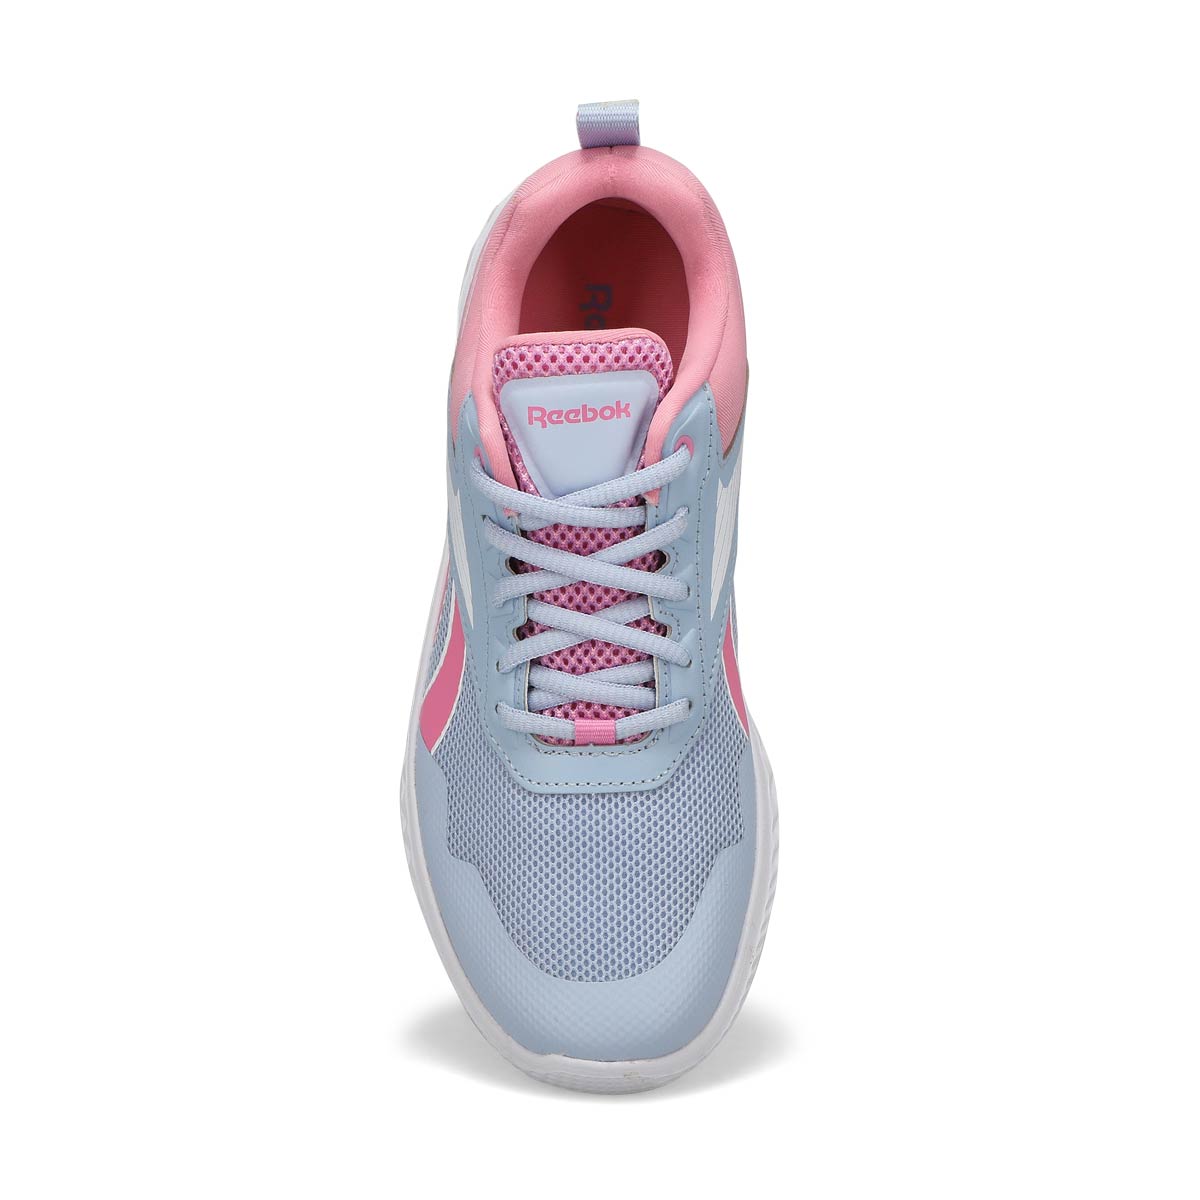 Girls Rush Runner 5 Lace Up Sneaker - White/Pink/Blue